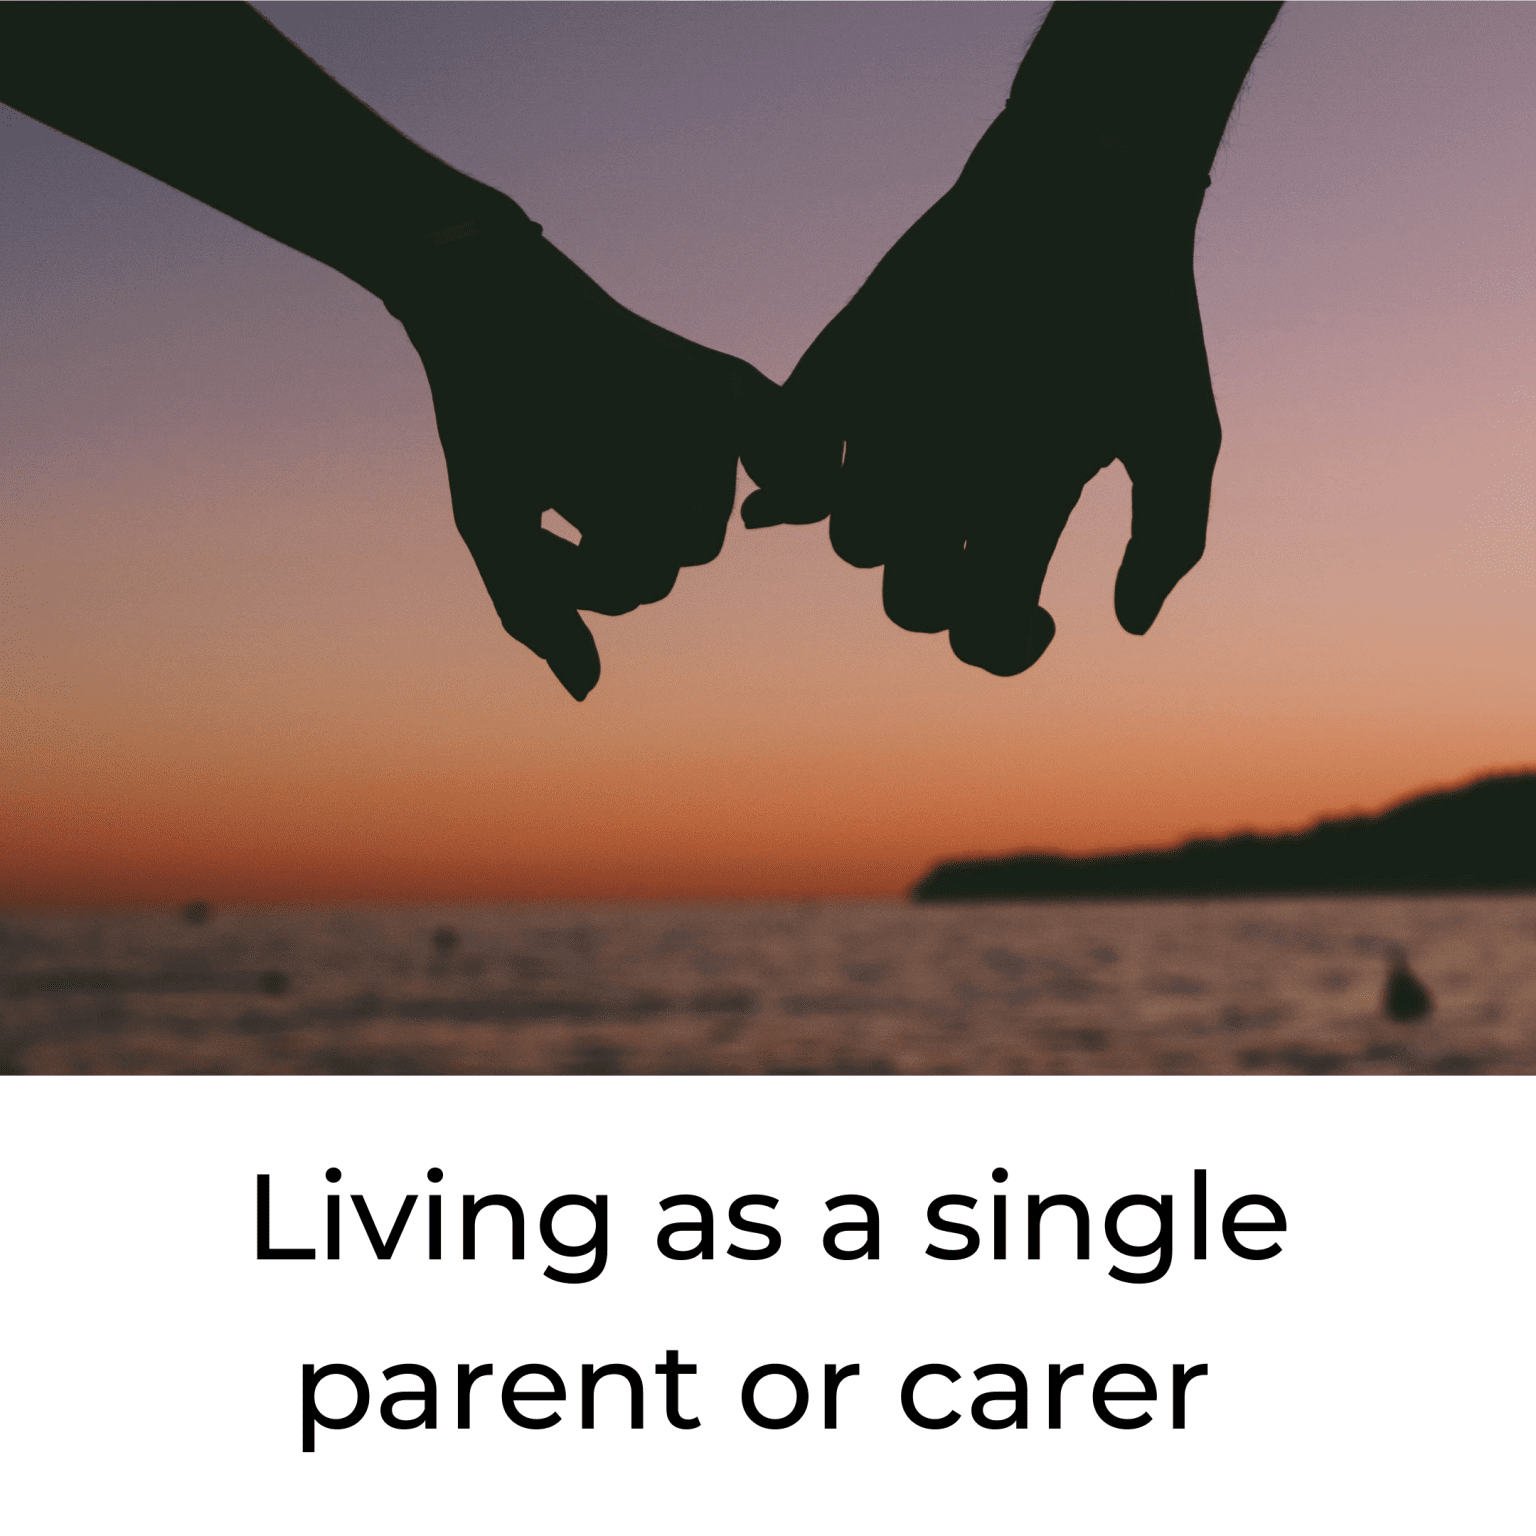 living alone as a single parent